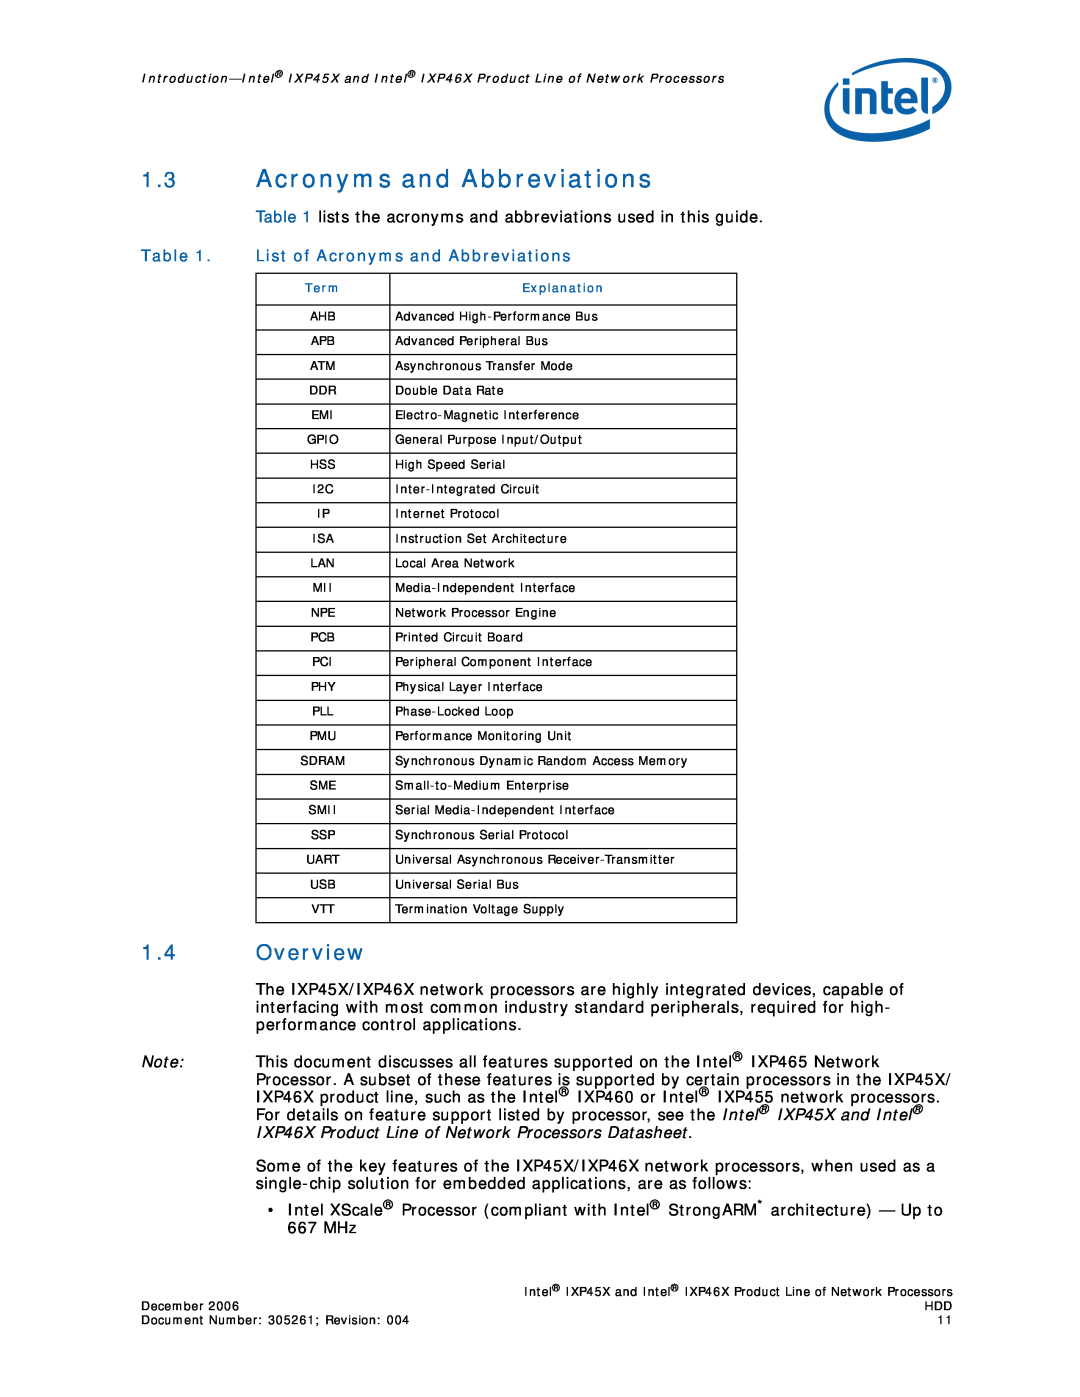 Intel IXP45X, IXP46X manual 1.3Acronyms and Abbreviations, 1.4Overview, List of Acronyms and Abbreviations 